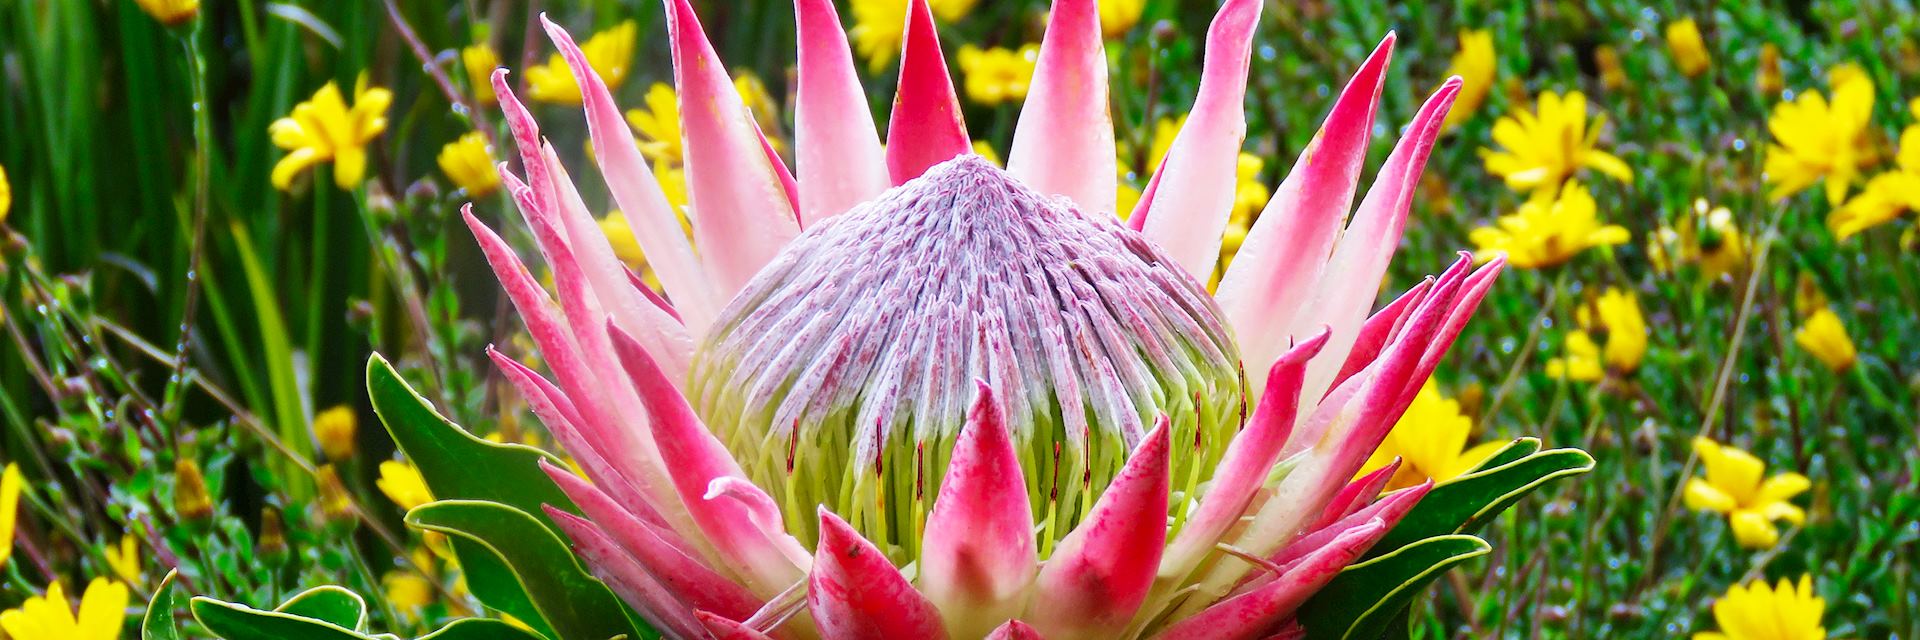 King protea, Kirstenbosch National Botanical Garden